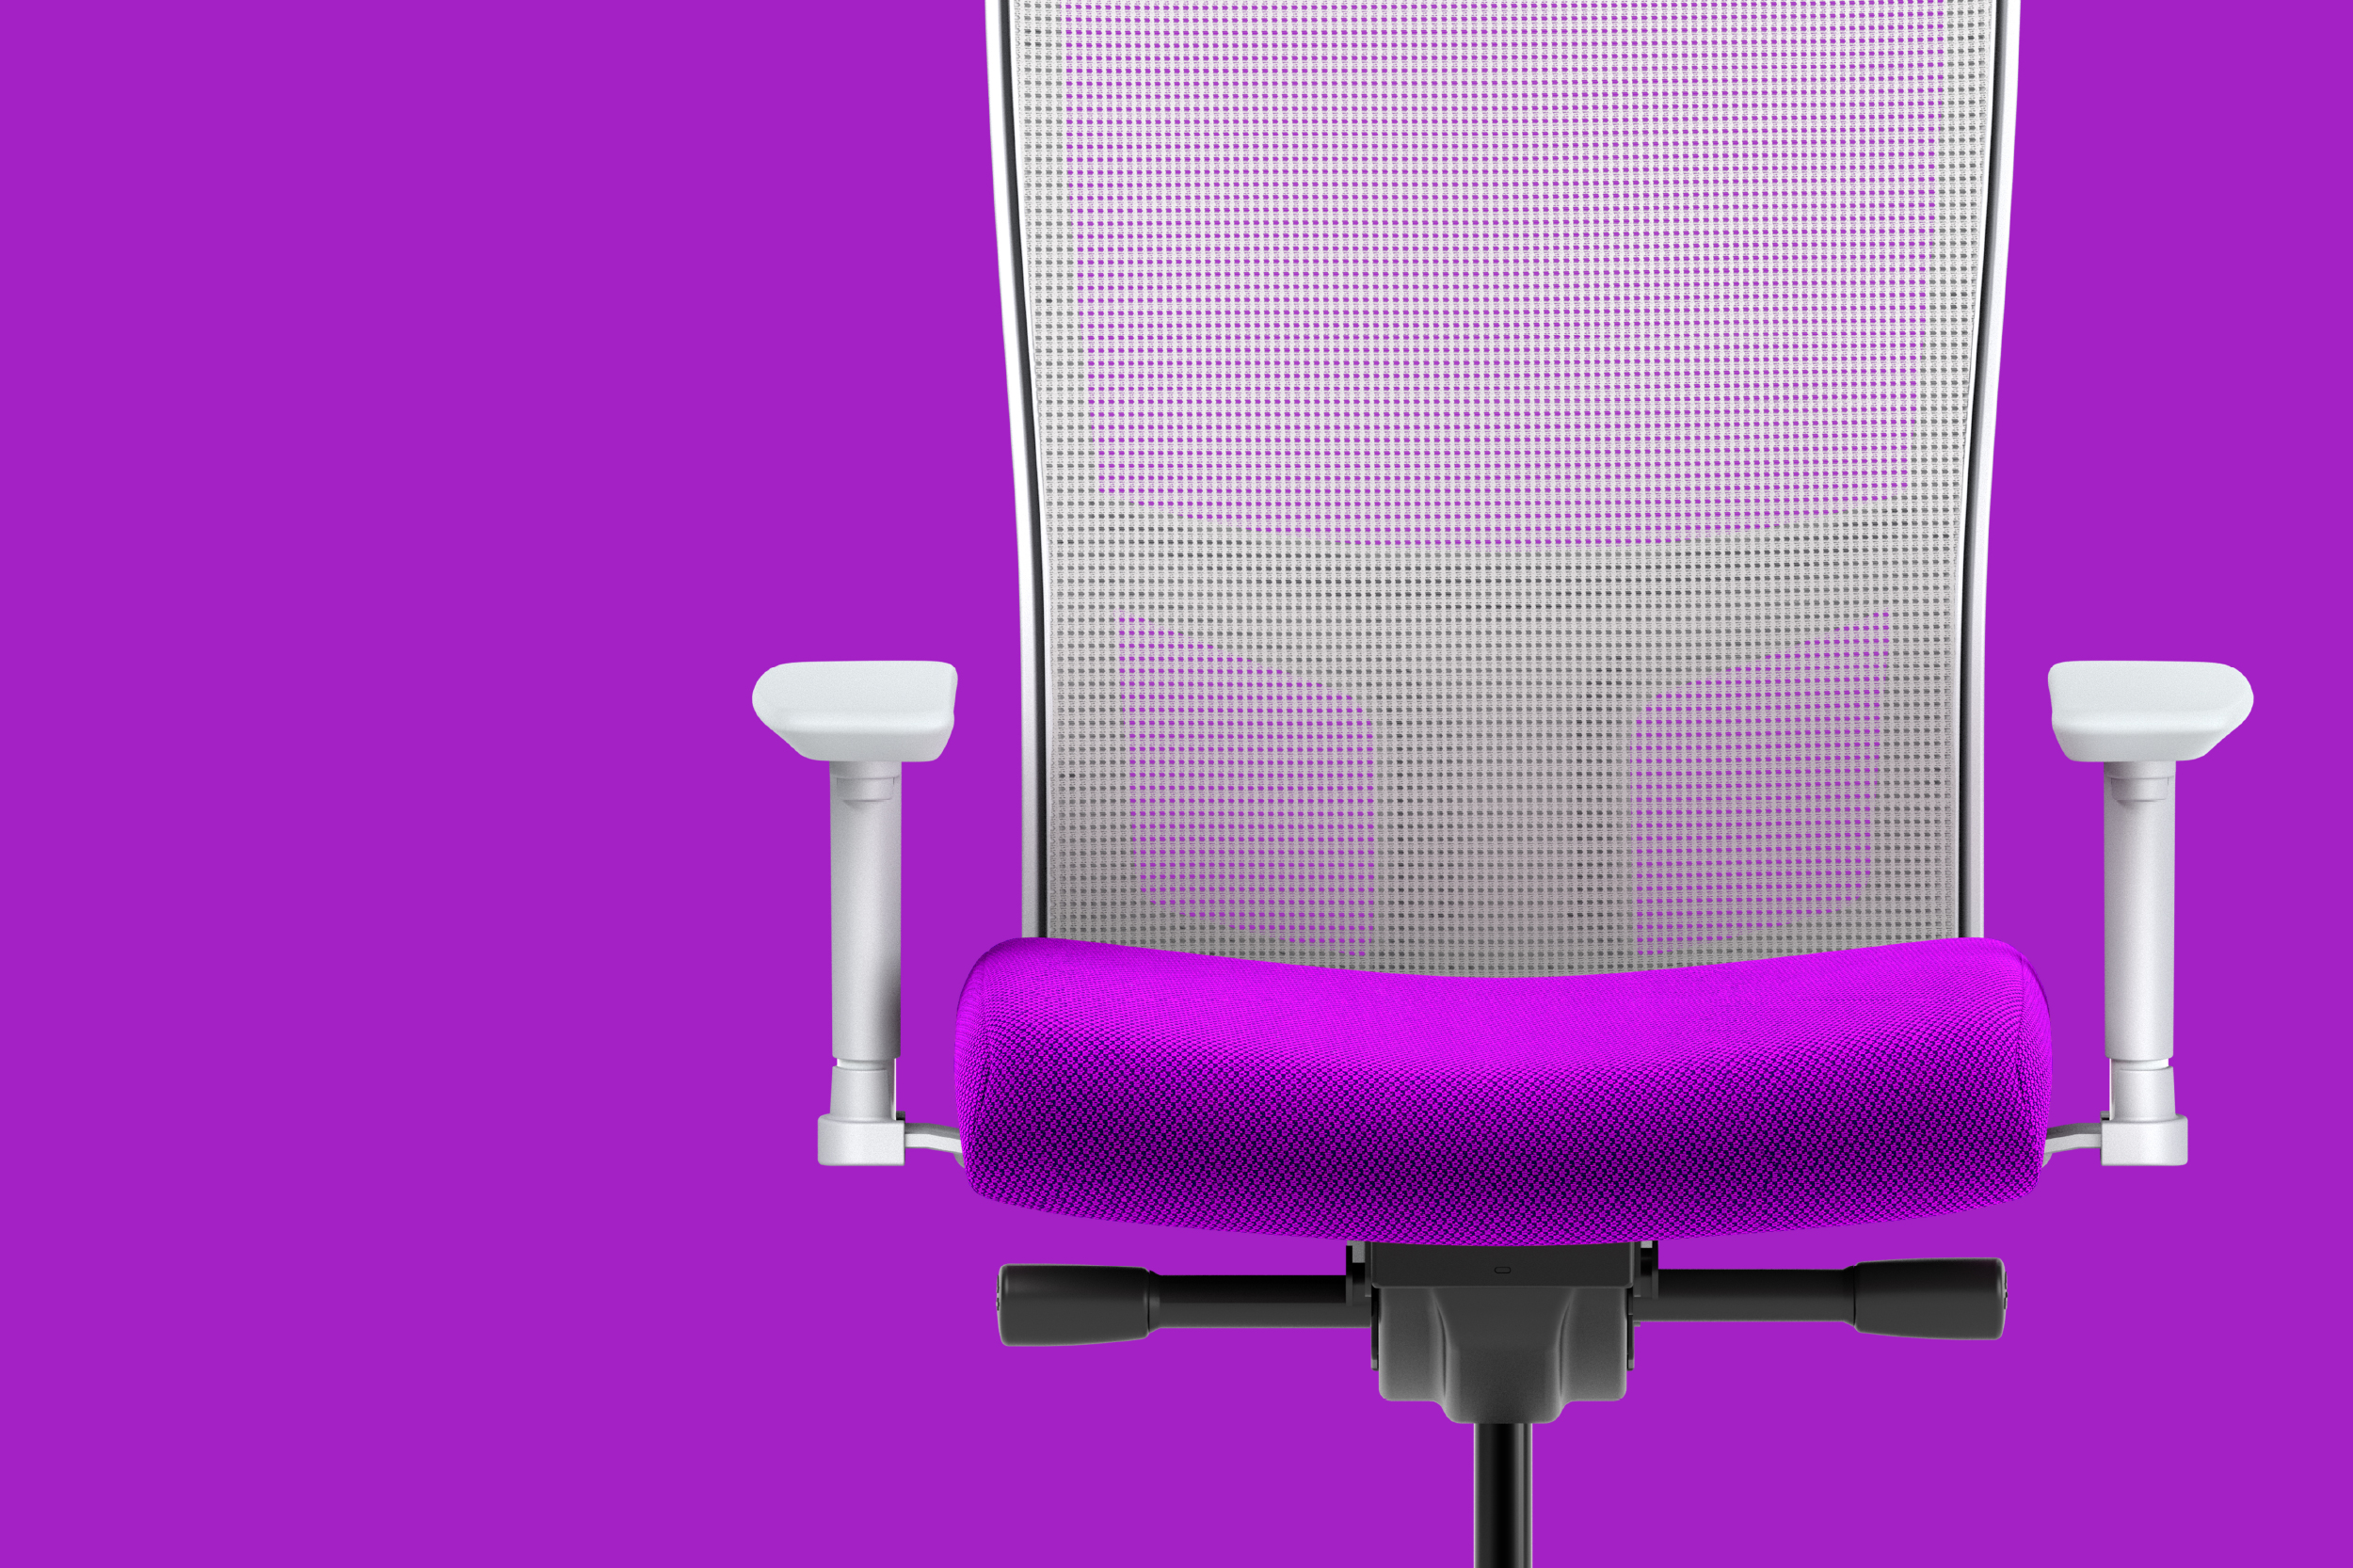 staples_purplechair